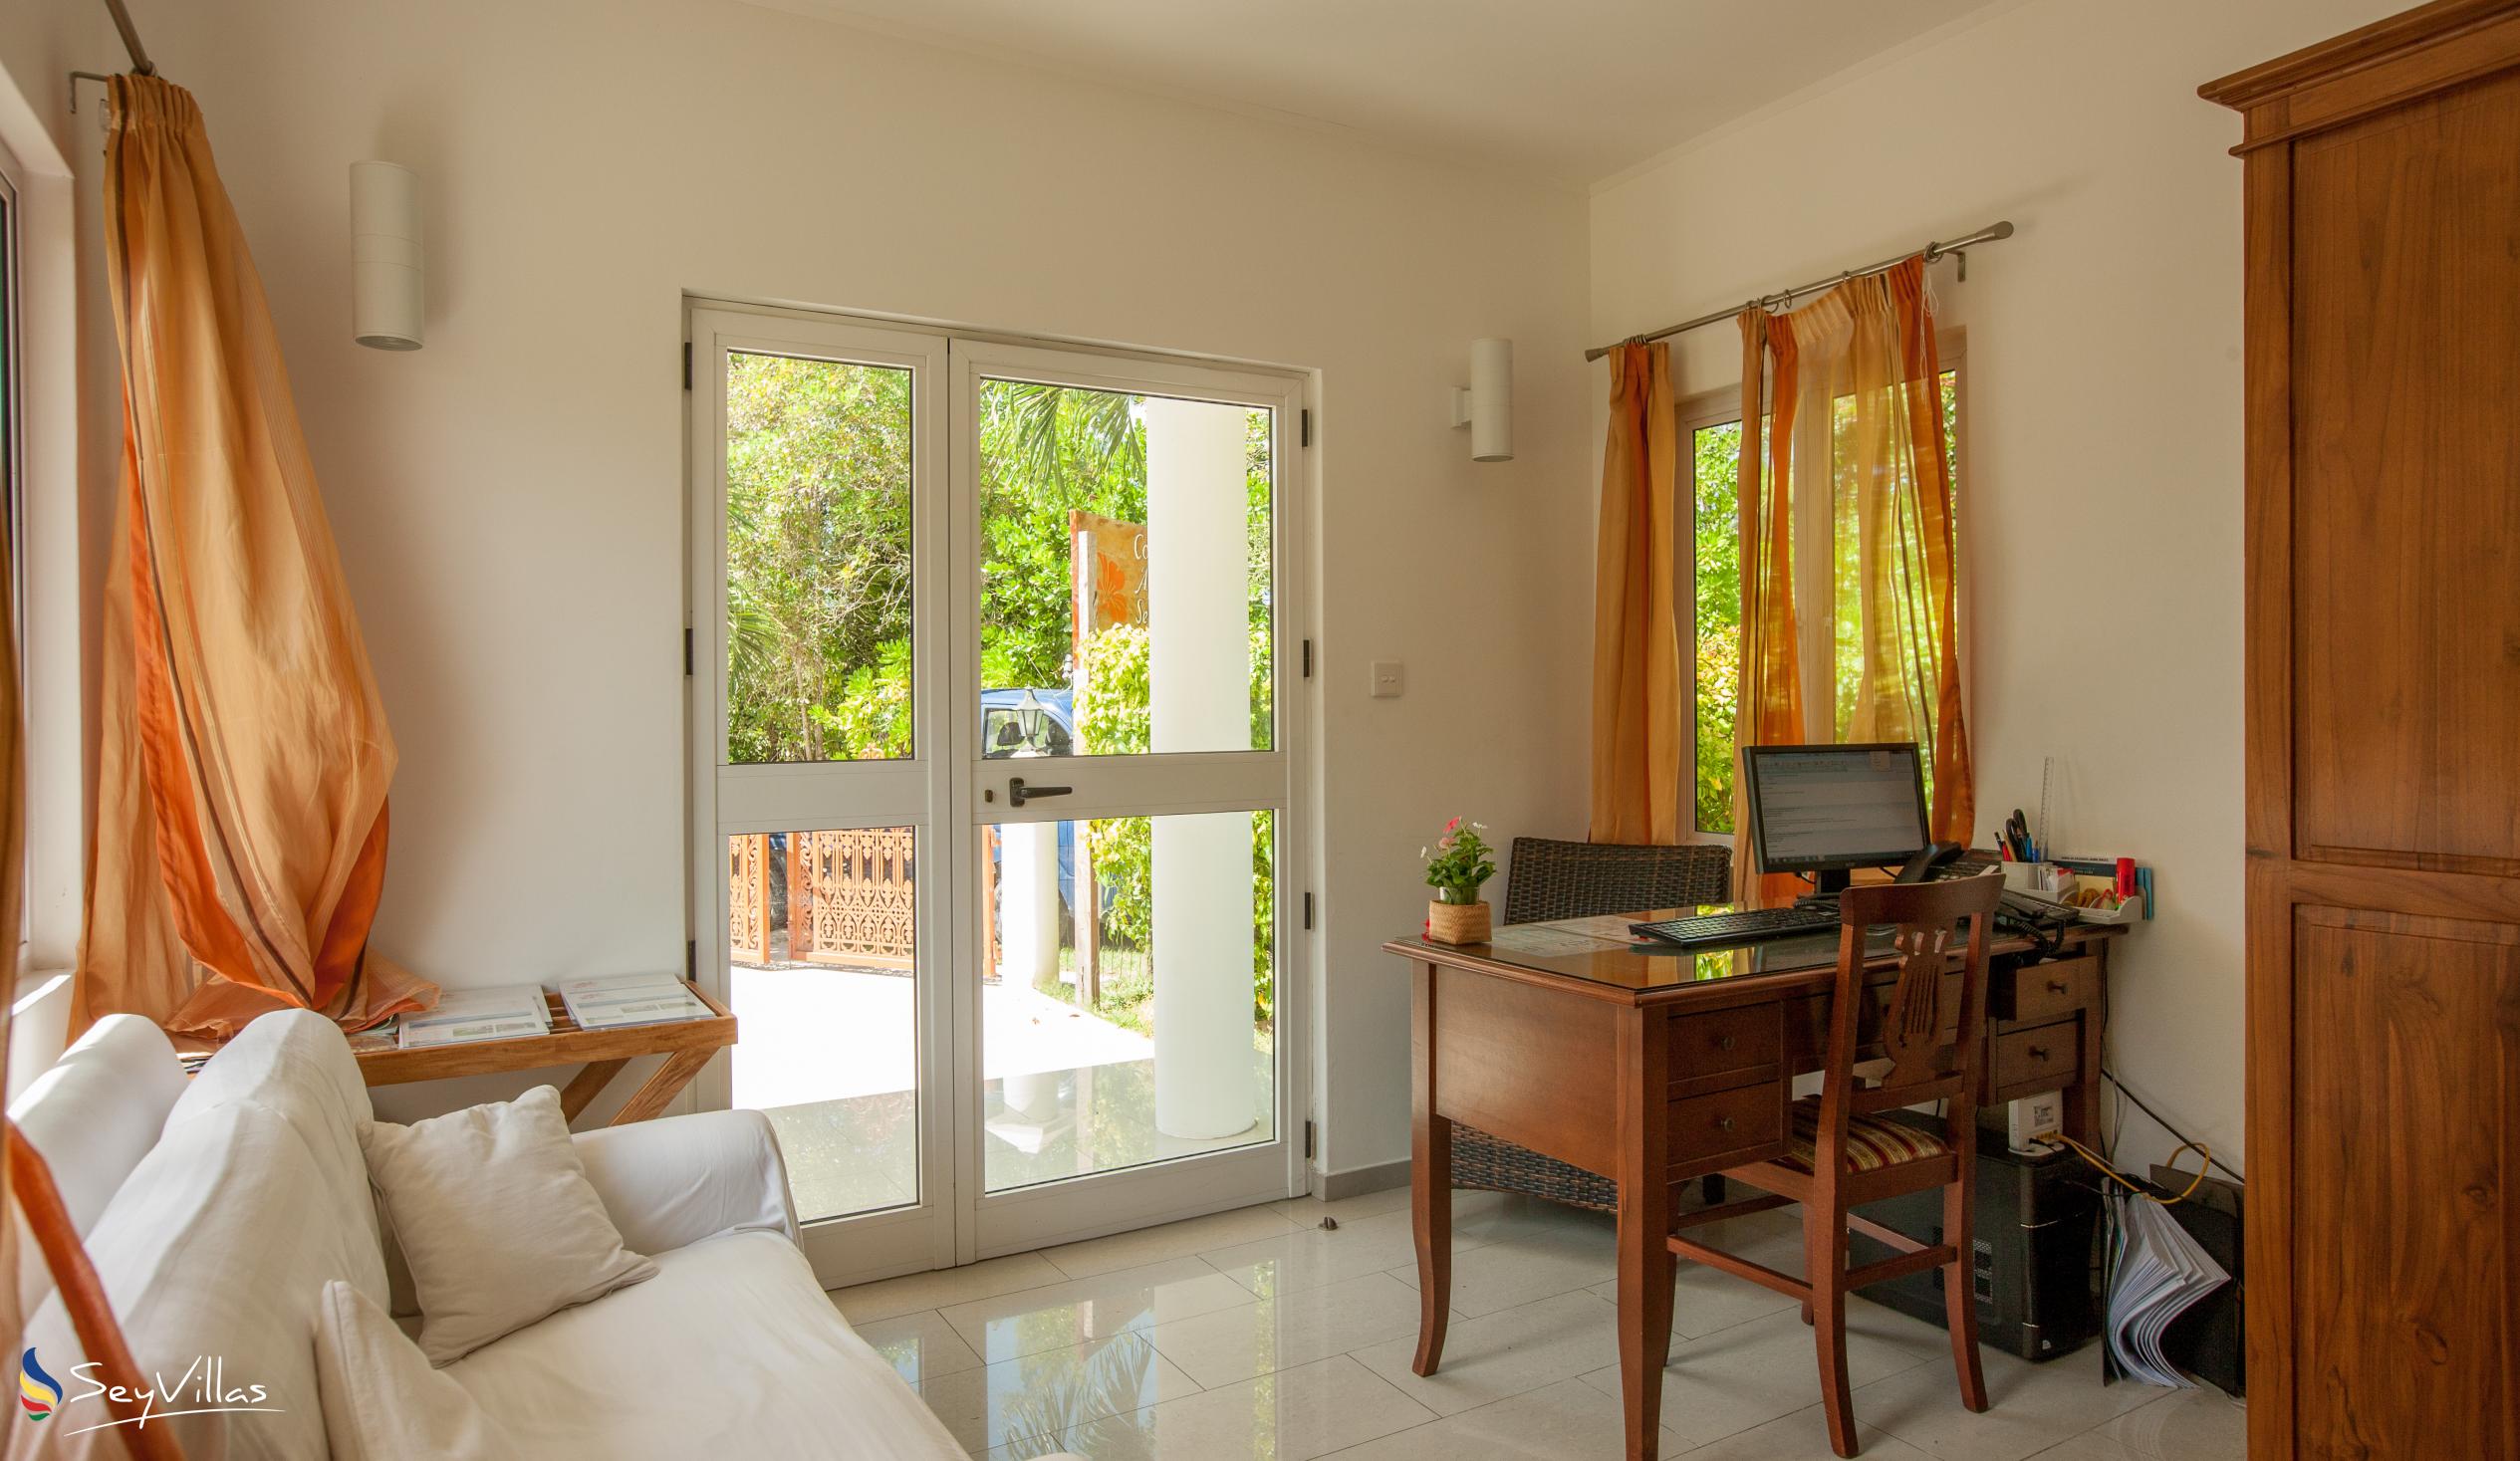 Photo 7: Cote d'Or Apartments - Indoor area - Praslin (Seychelles)